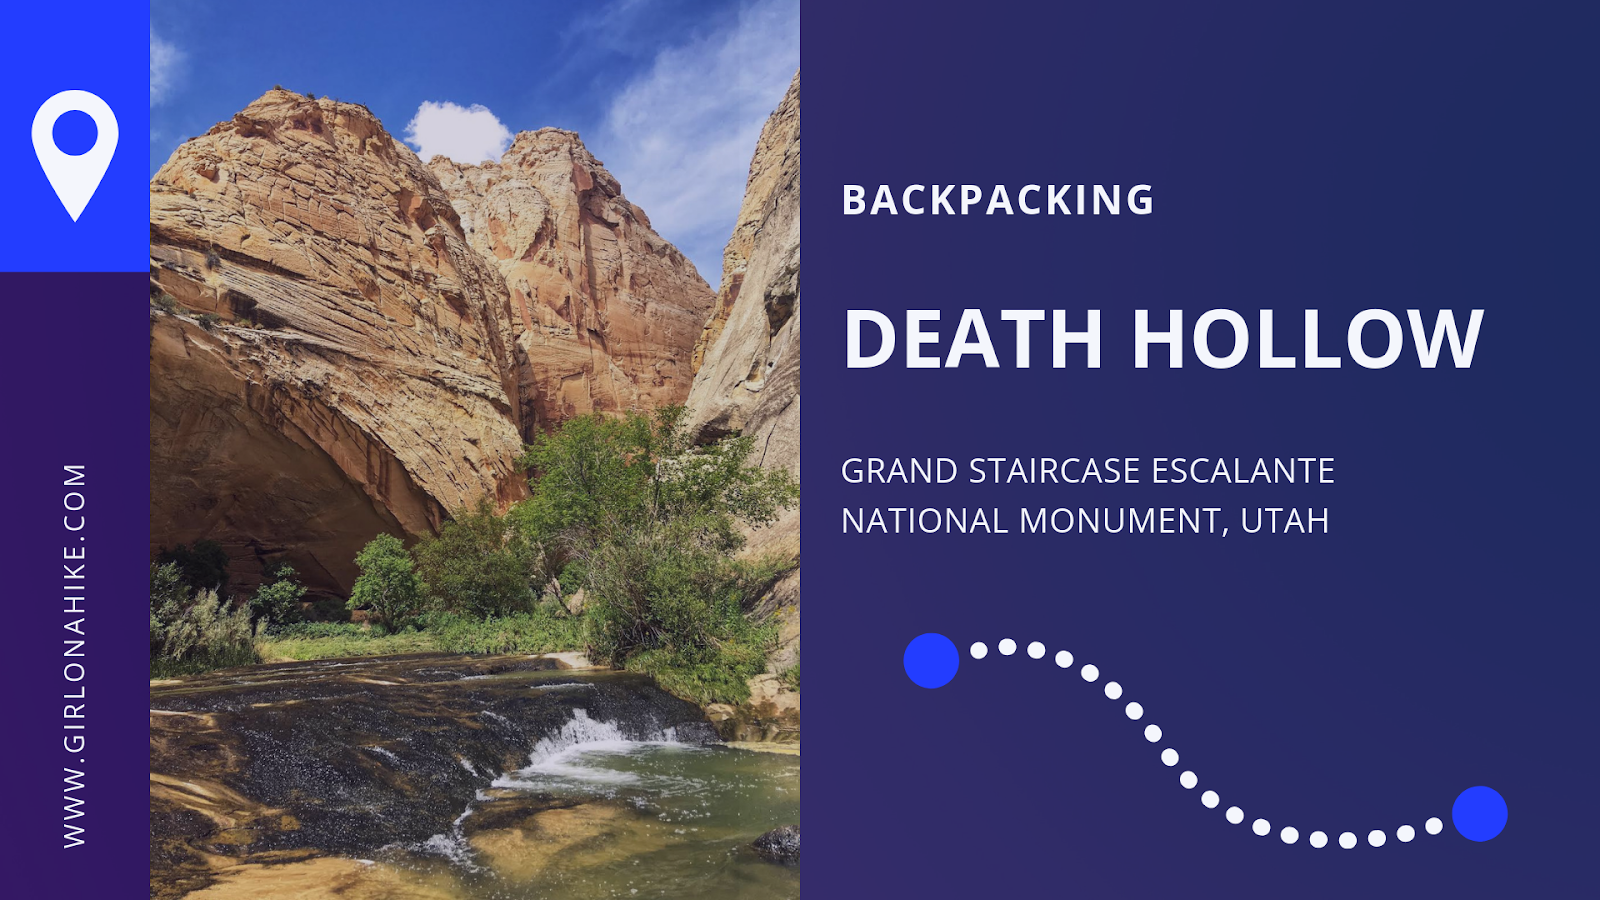 Backpacking Death Hollow, Escalante, Grand Staircase Escalante National Monument